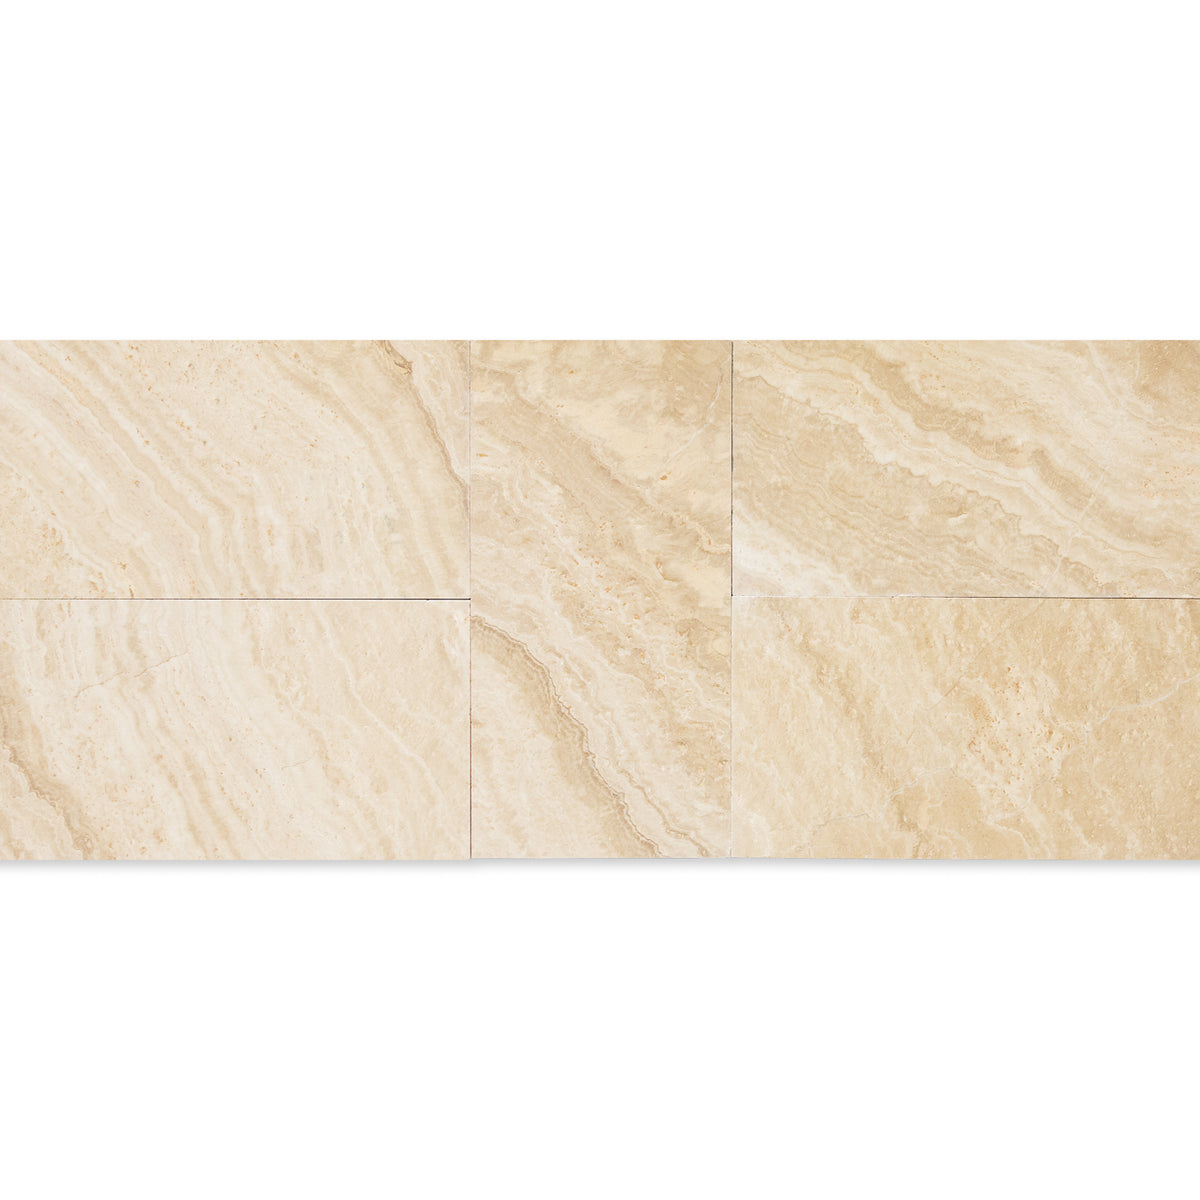 8x16” Carmel Travertine Tile in Honed Finish Main Product Slider View